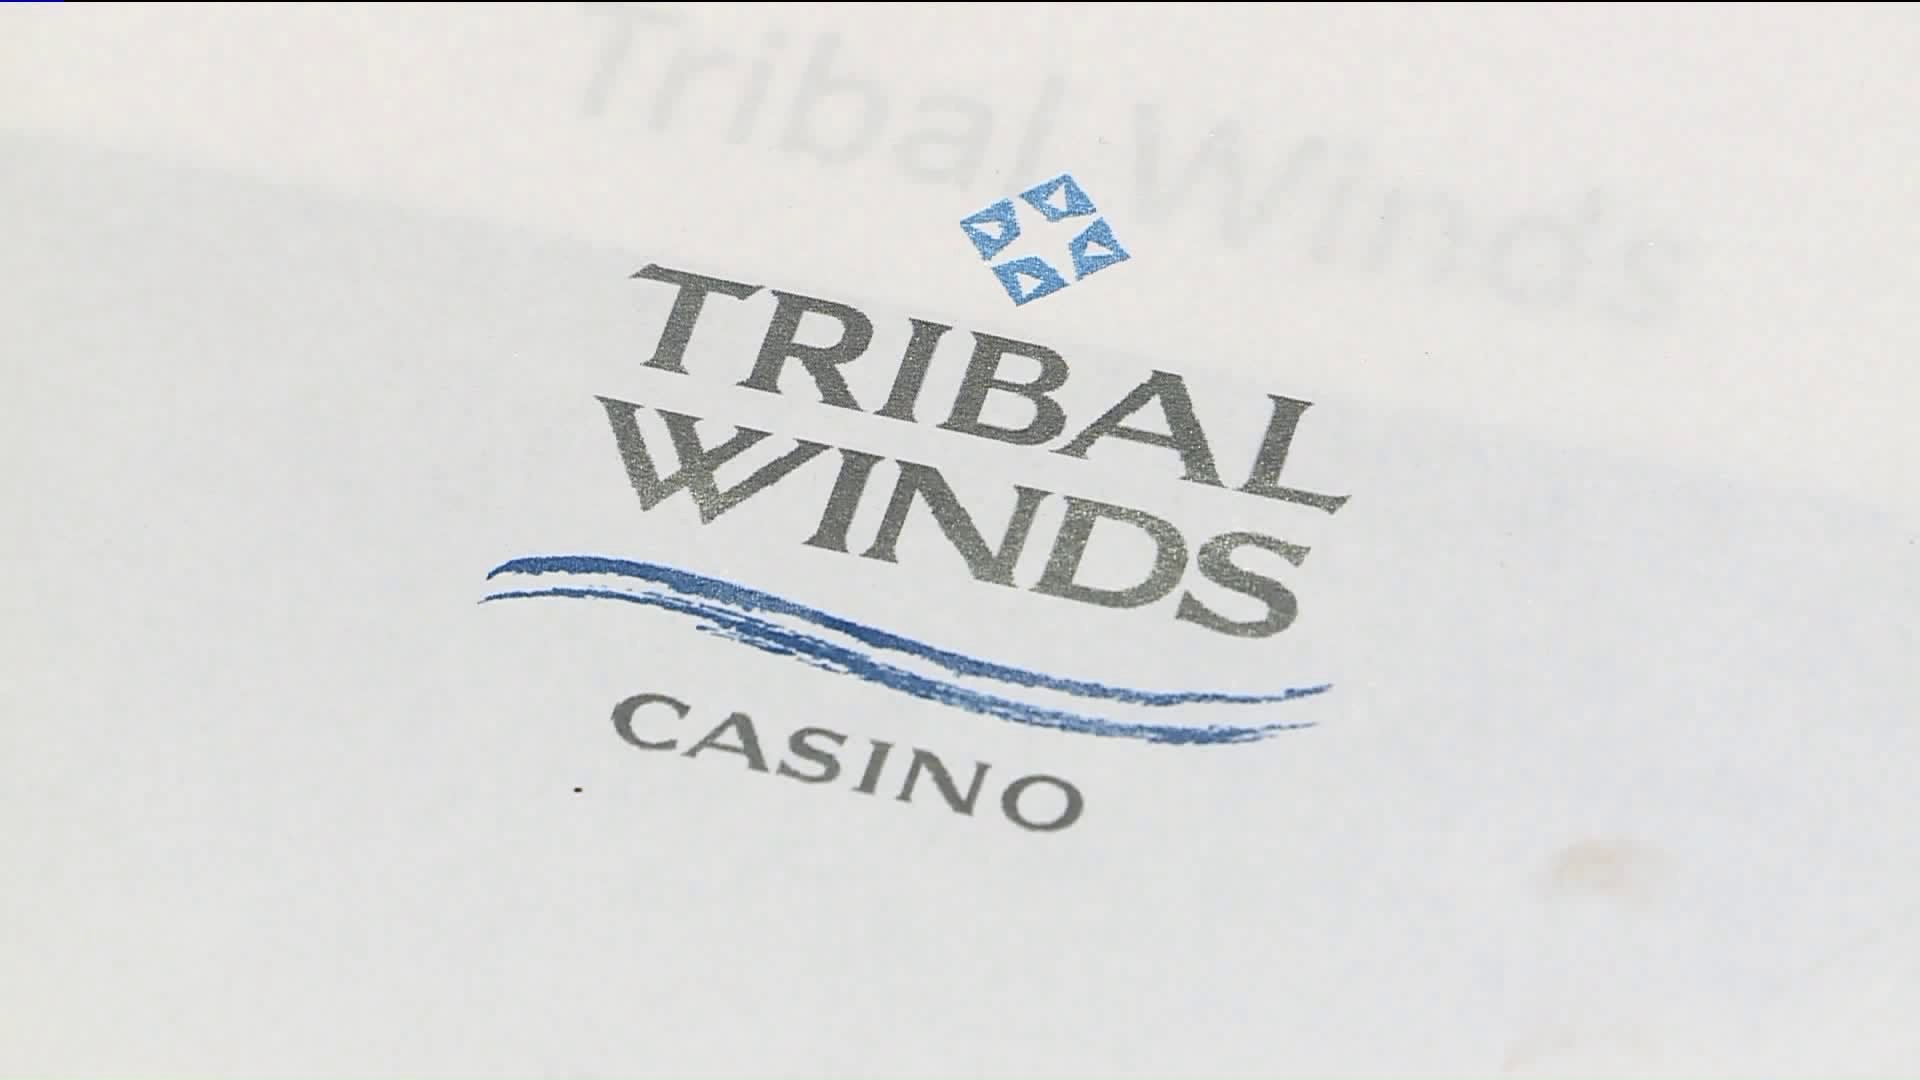 Tribal Winds Casino